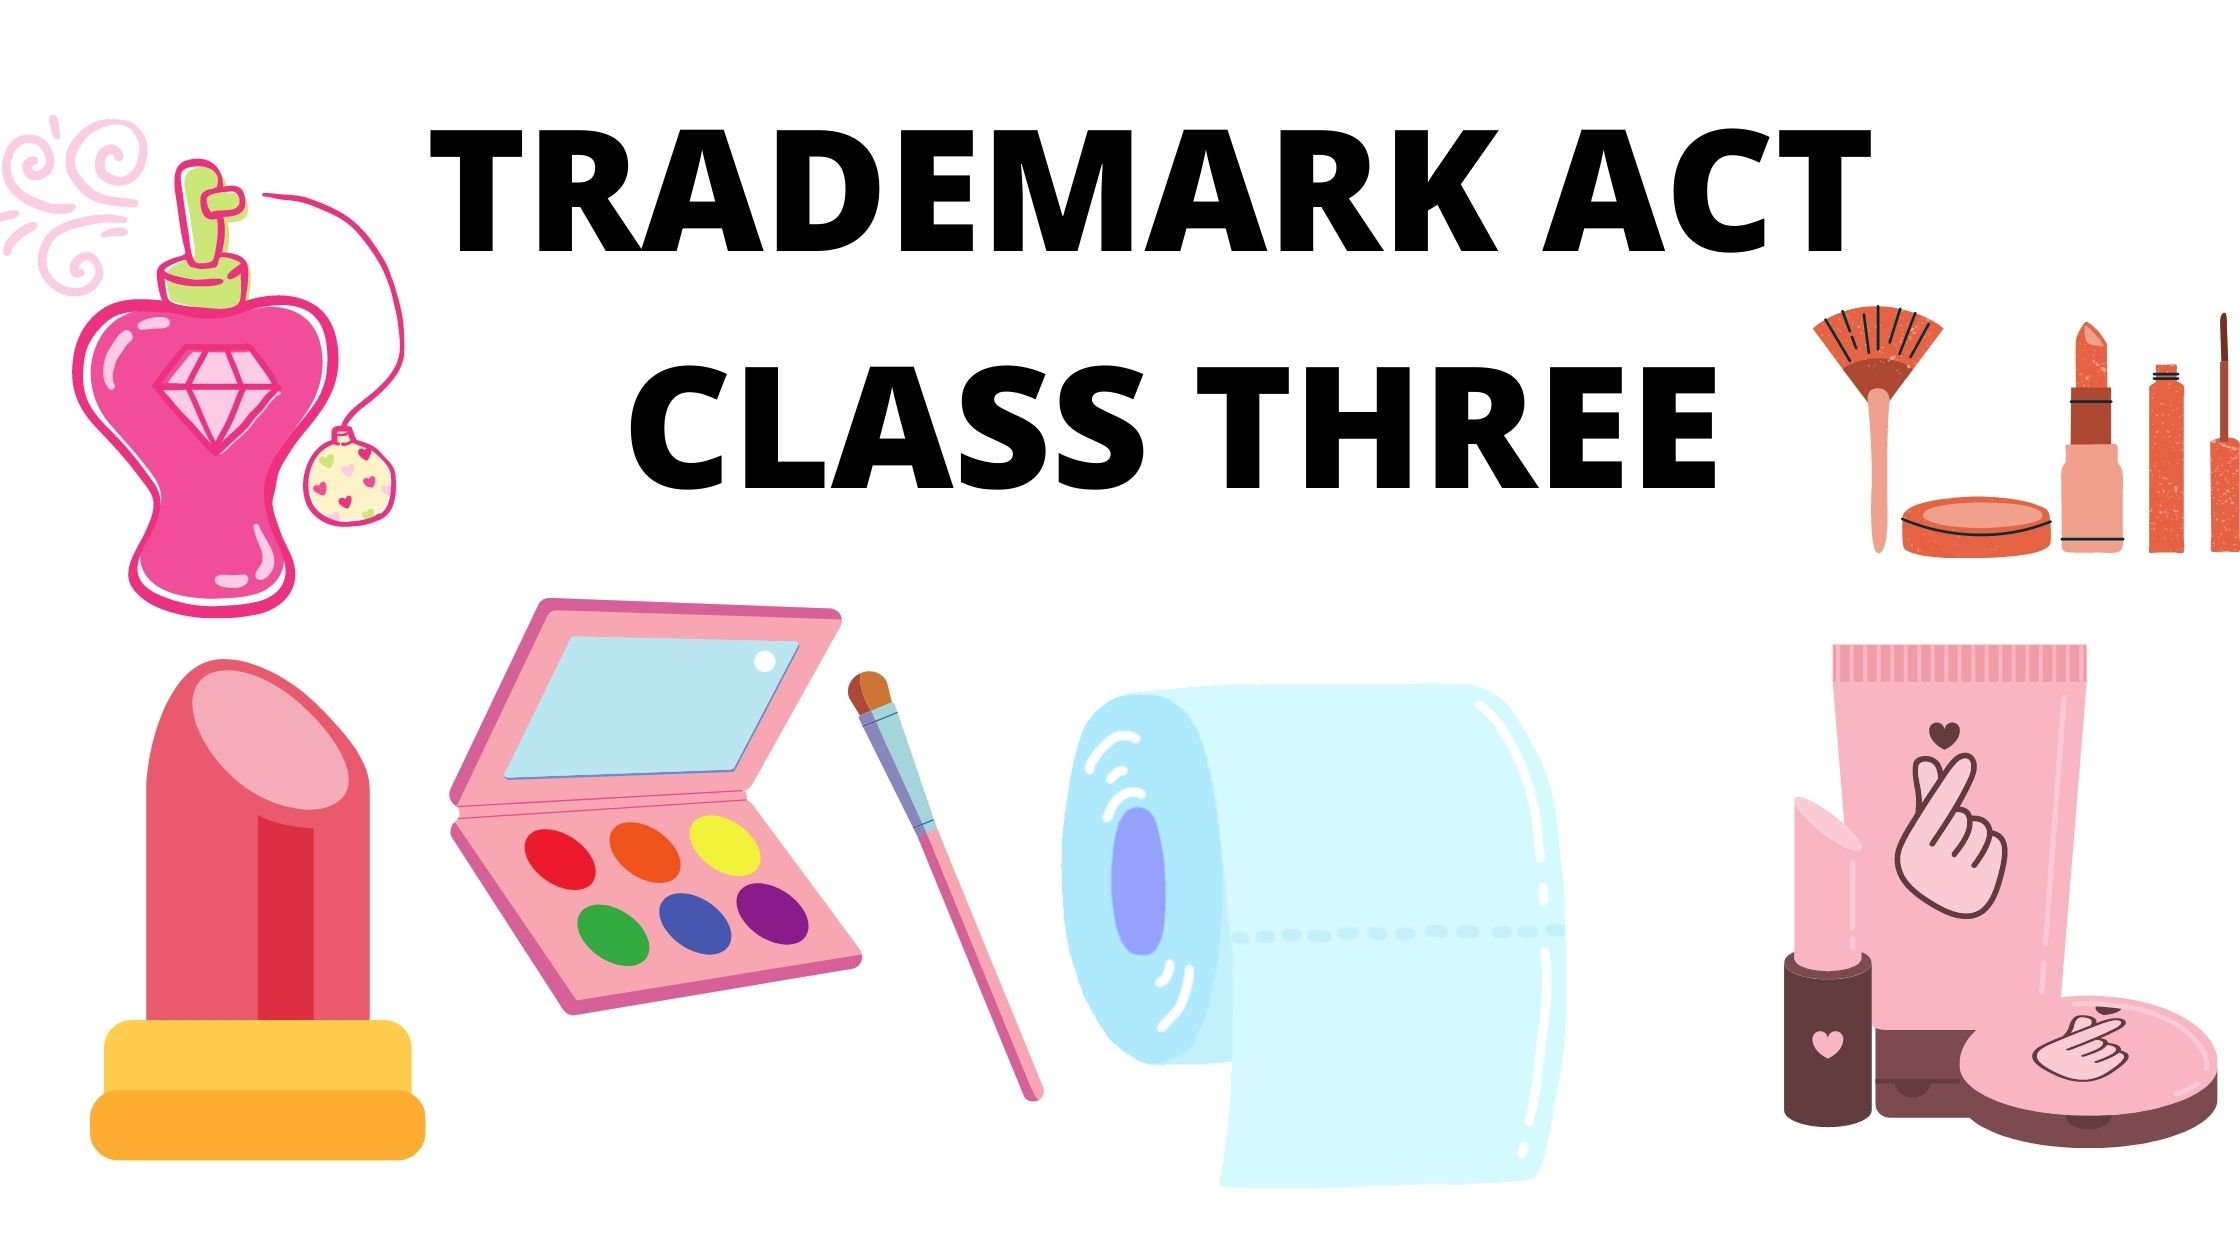 TRADEMARK ACT CLASS THREE